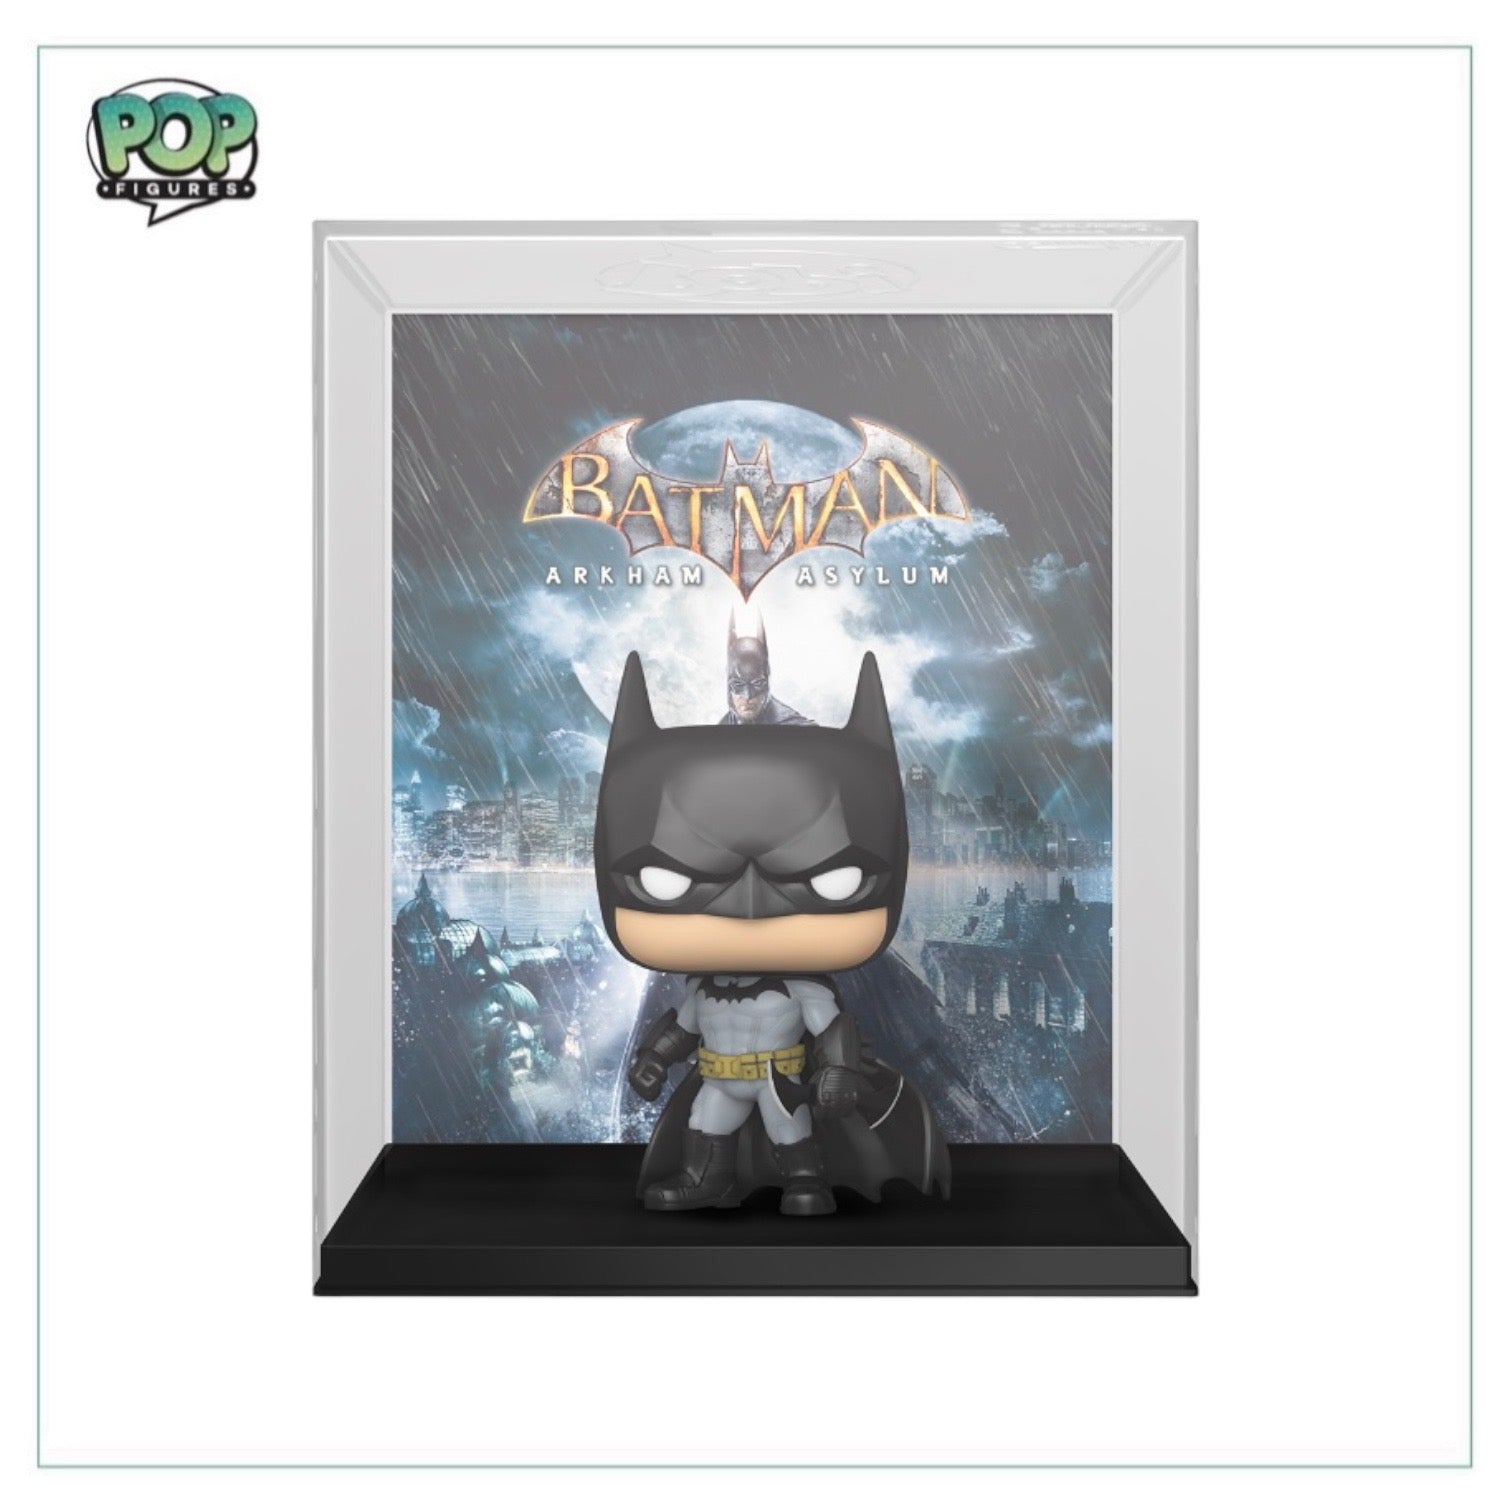 Batman #10 Funko Pop Game Cover! - Batman Arkham Asylum - GameStop Exclusive - Condition 8/10